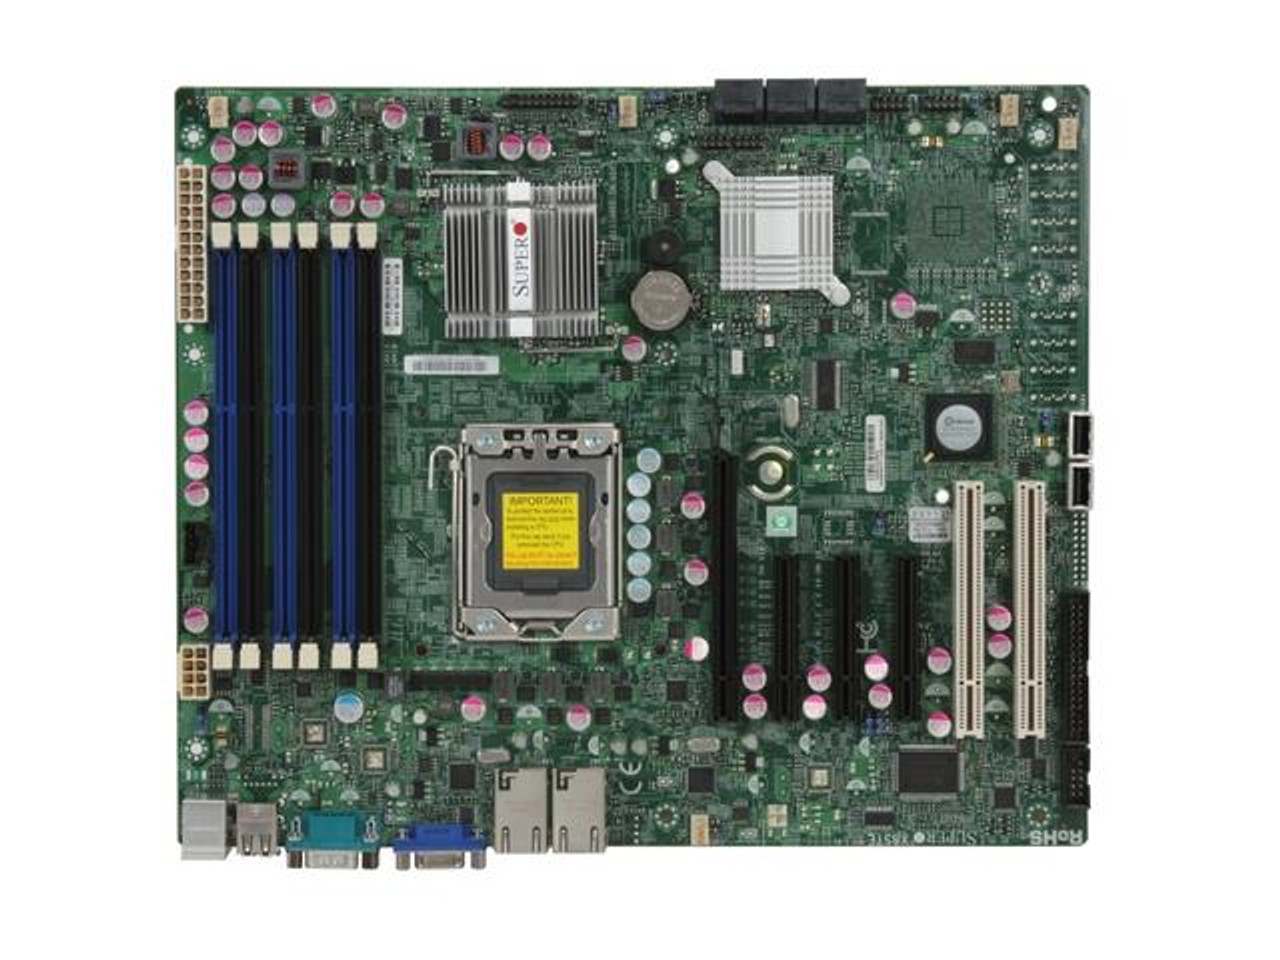 SuperMicro X8STE Socket LGA 1366 Intel X58 Express Chipset Intel Core i7/ i7 Extreme Edition / Xeon 5600/5500 Series Processors Support DDR3 6x DIMM 6x SATA 3.0Gb/s ATX Server Motherboard  Mfr P/N X8STE